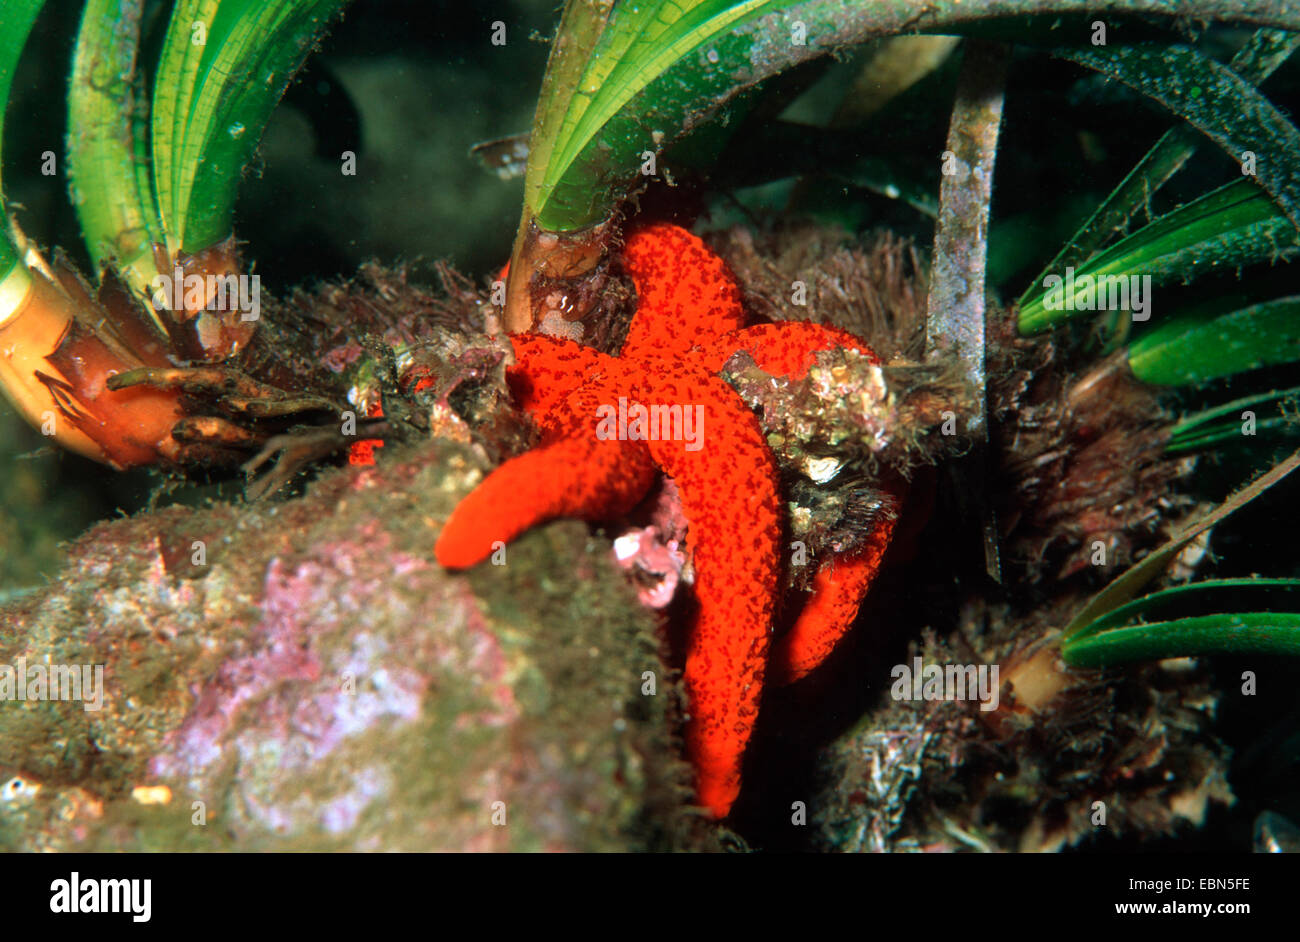 Red Sea Star On Rock Underwater Mediterranean Sea Stock Photo